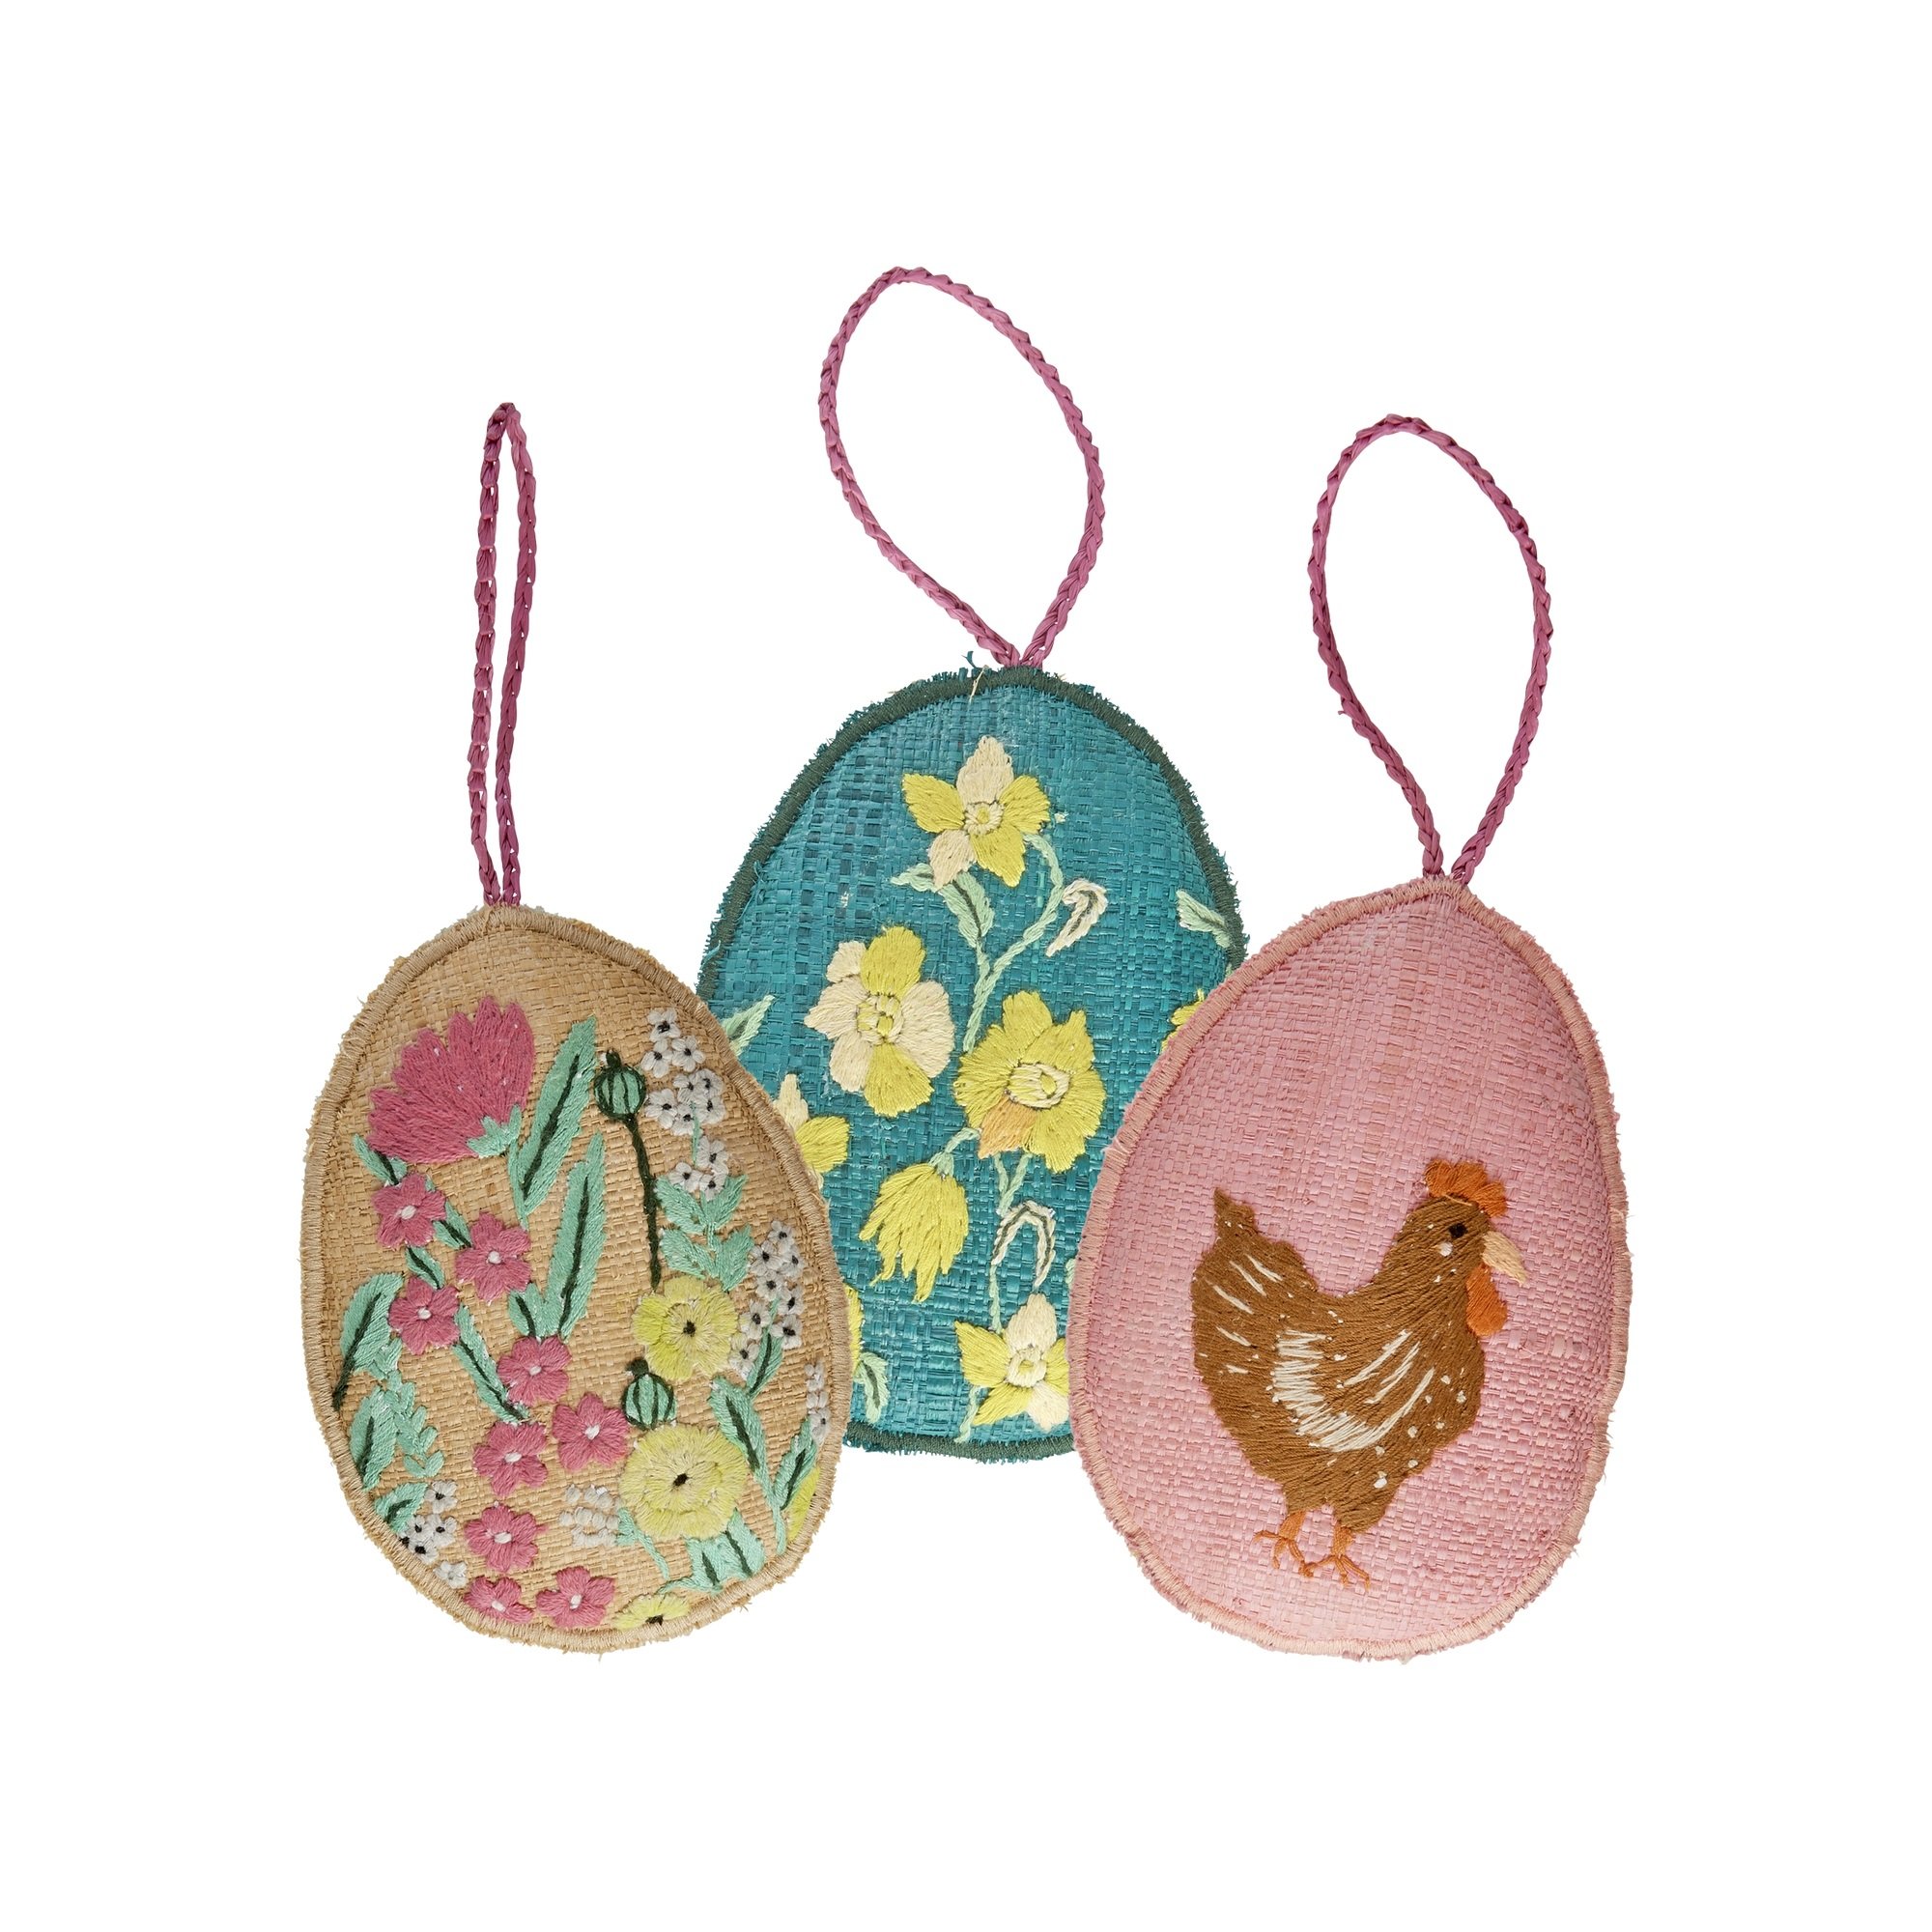 2: Rice - Store Raffia Påskeægs Ornamenter 3 Asst. Designs med Brodering Pink/Gul/Blå